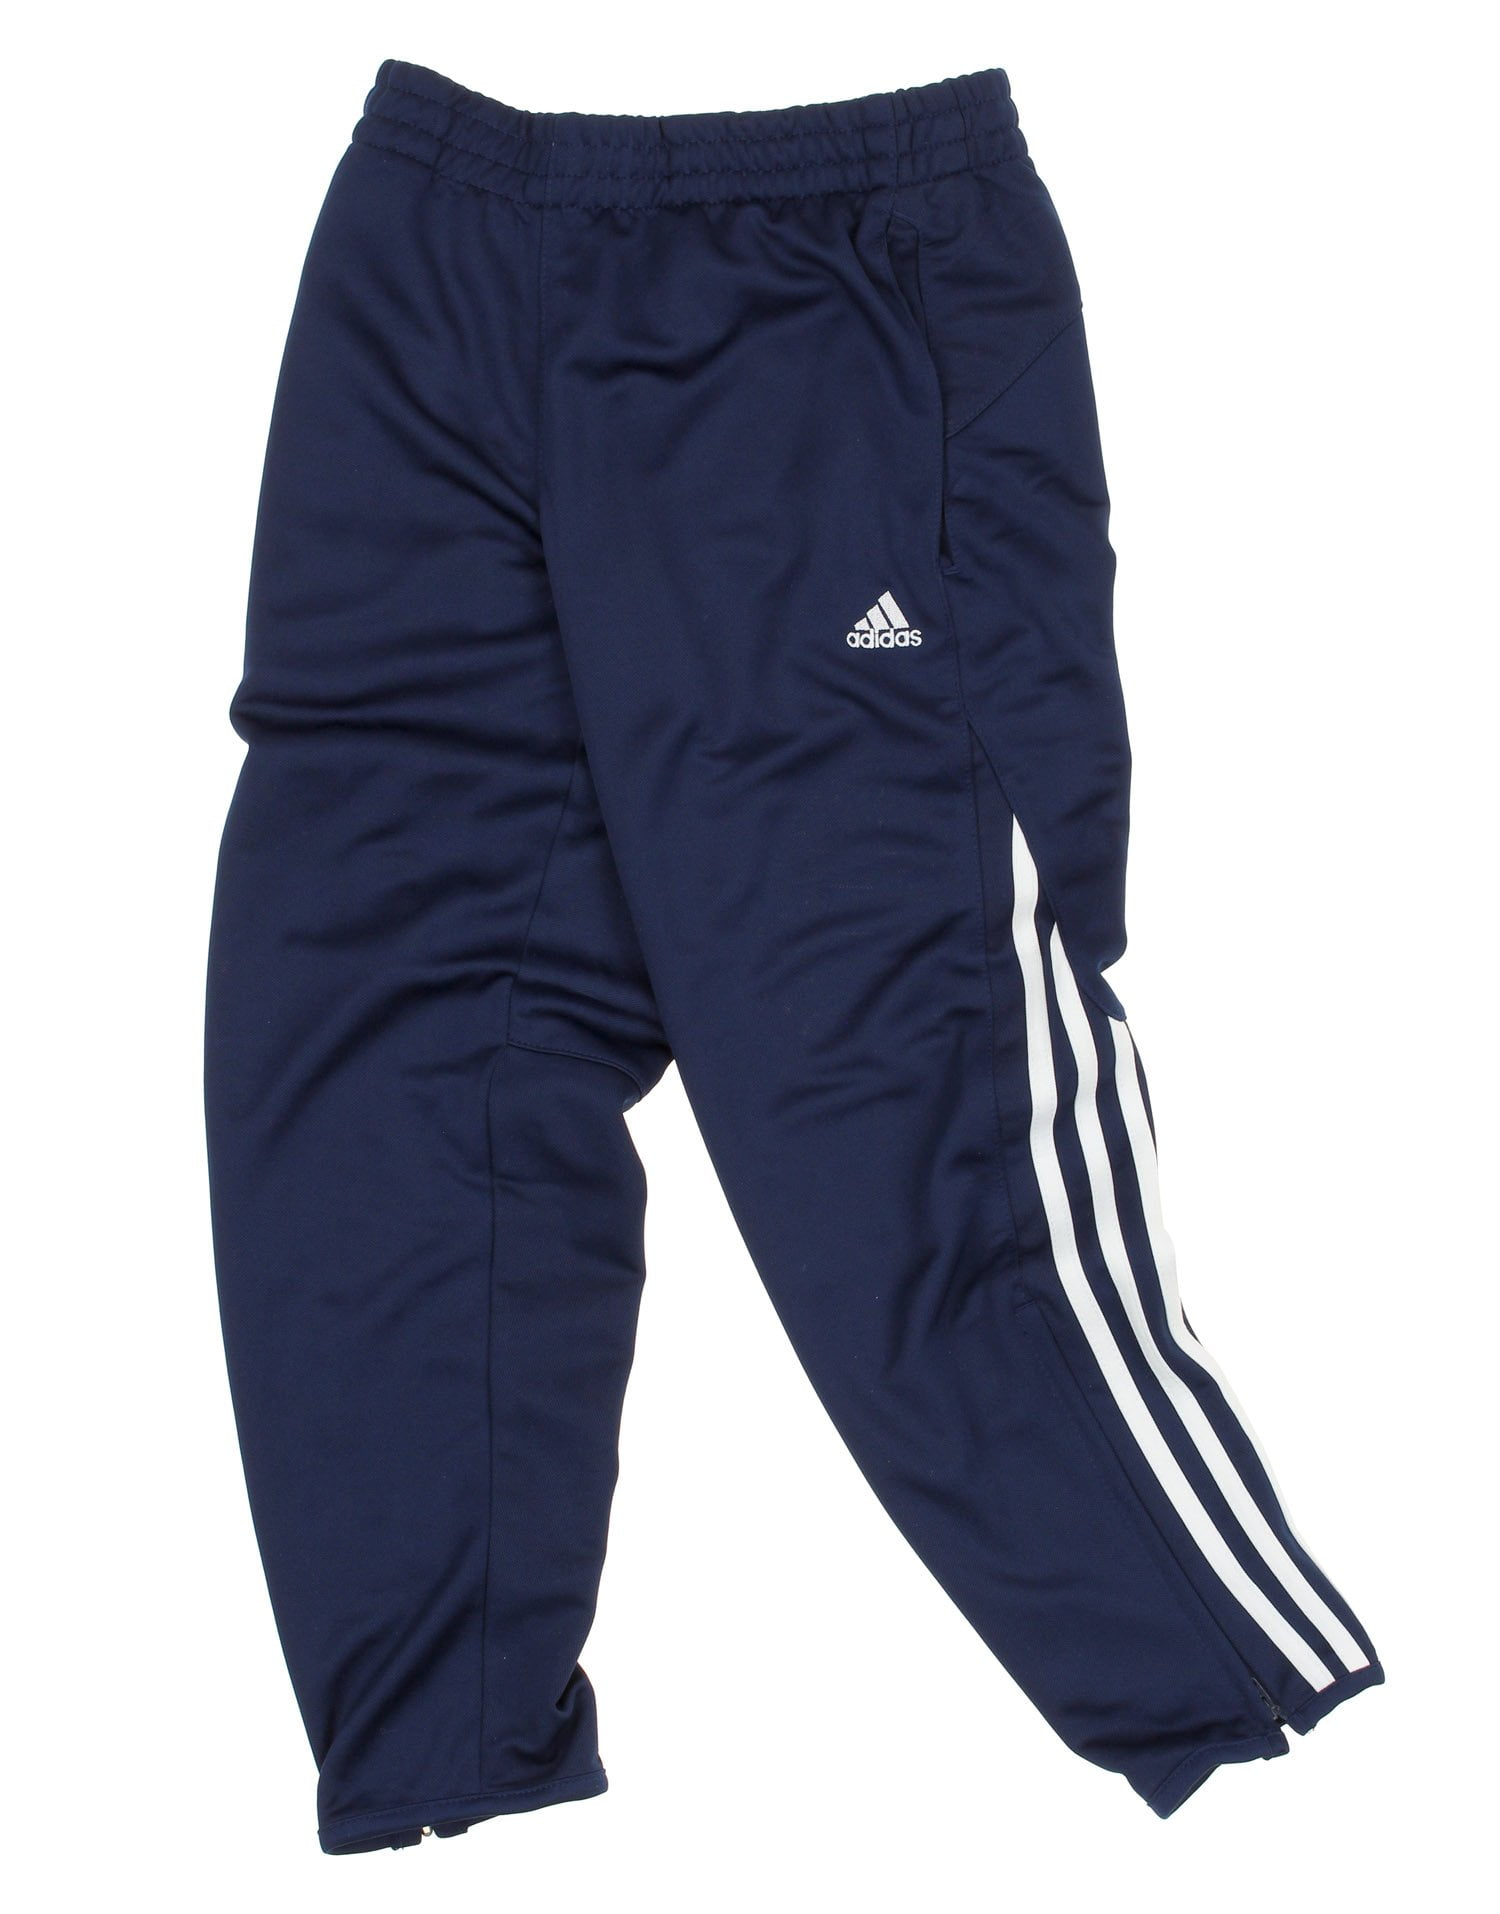 Adidas Youth Climalite Field Pants, 2 Color Options - Walmart.com